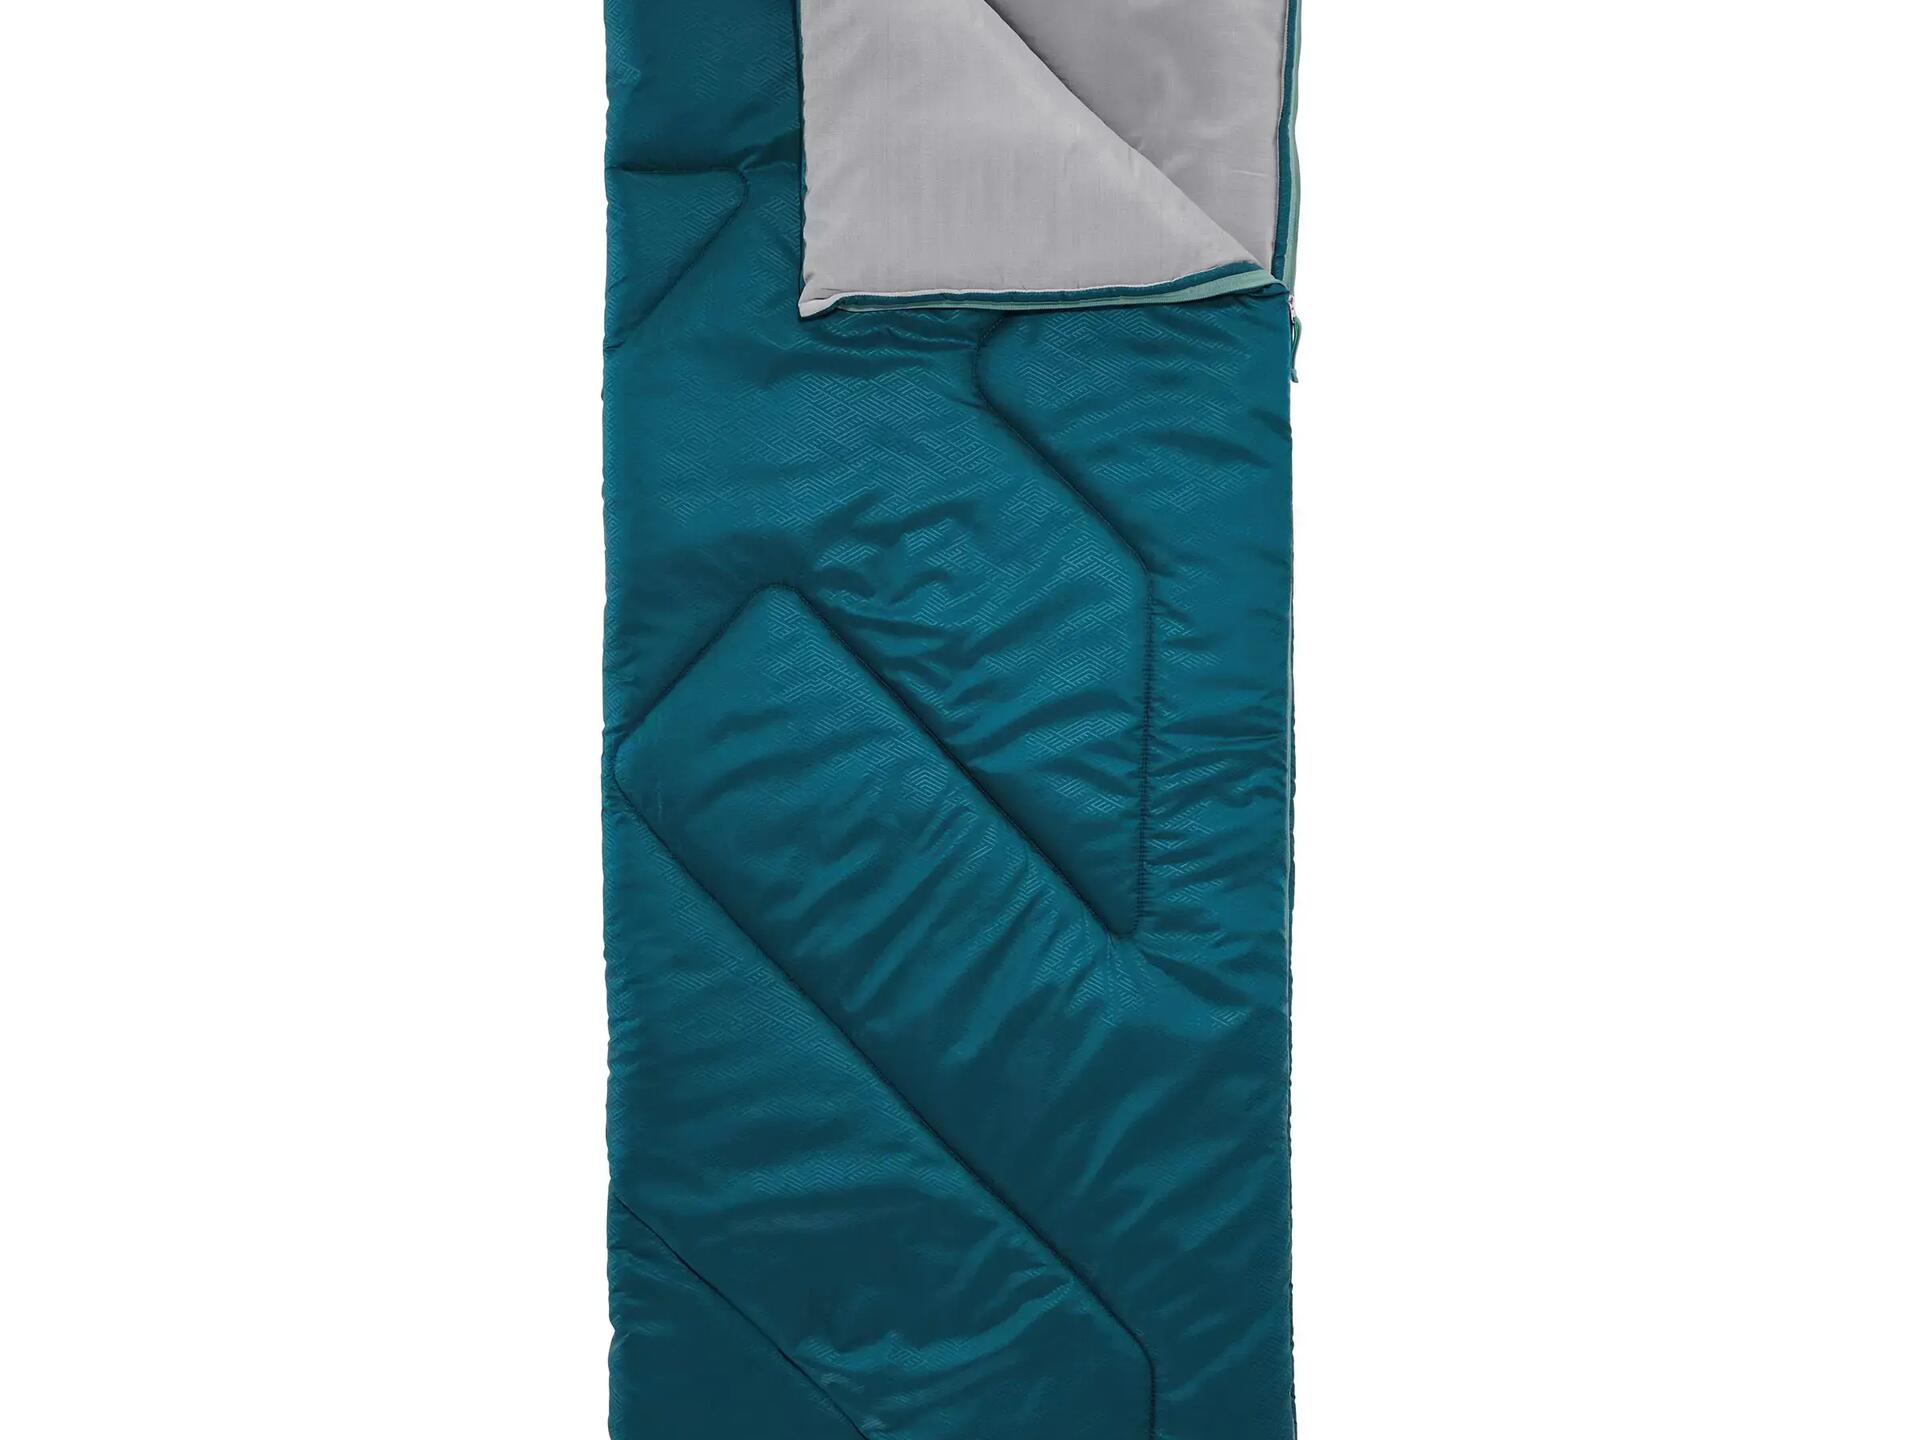 Temperate camping sleeping bag